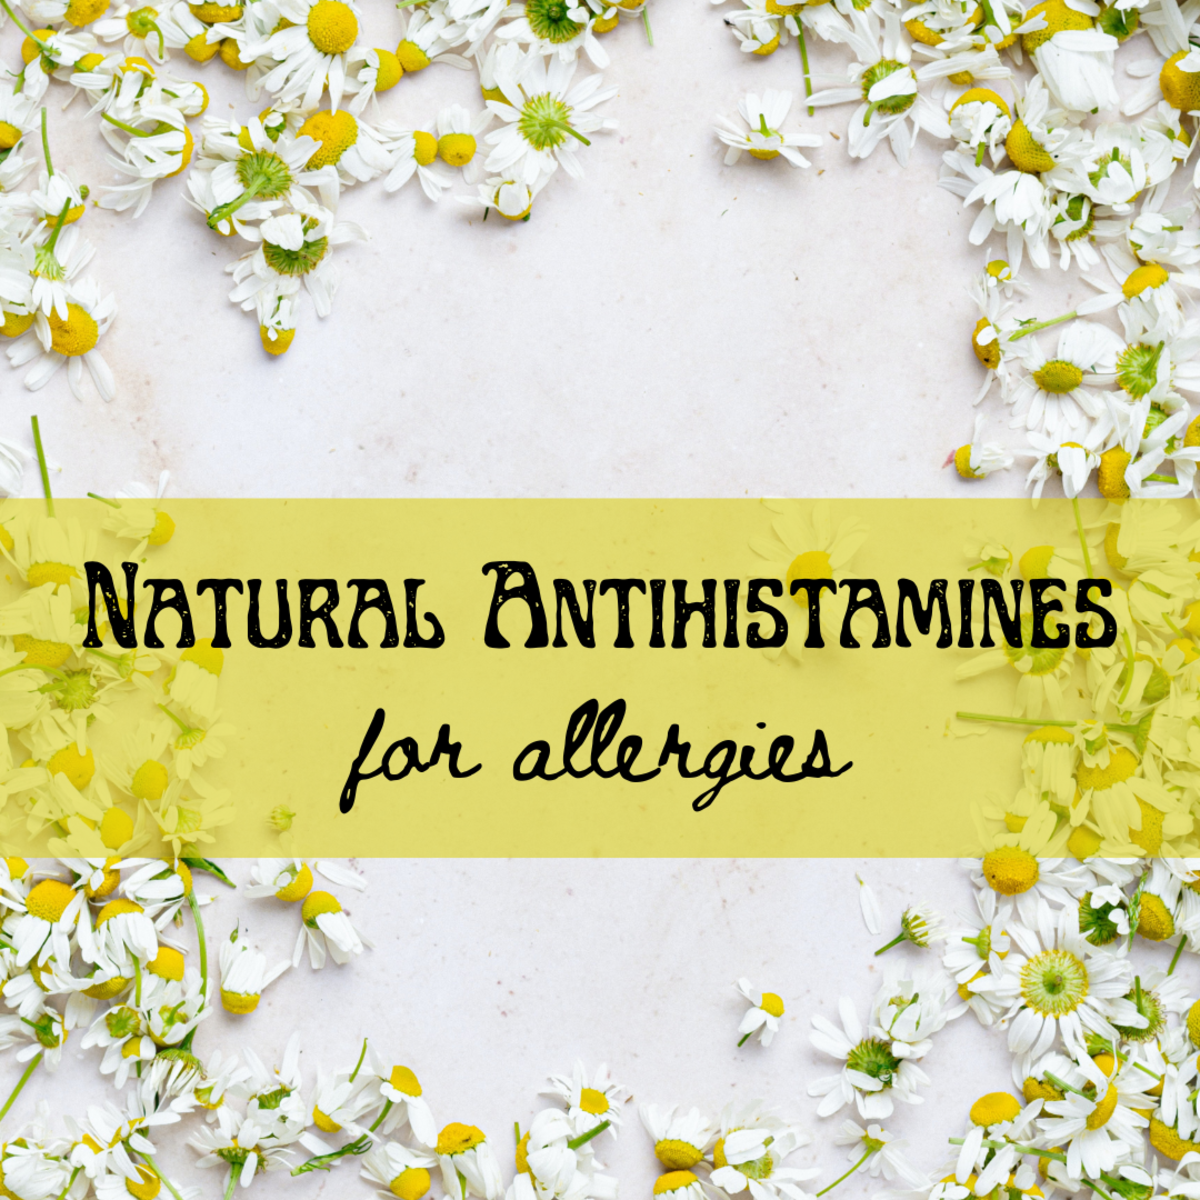 Natural Antihistamines